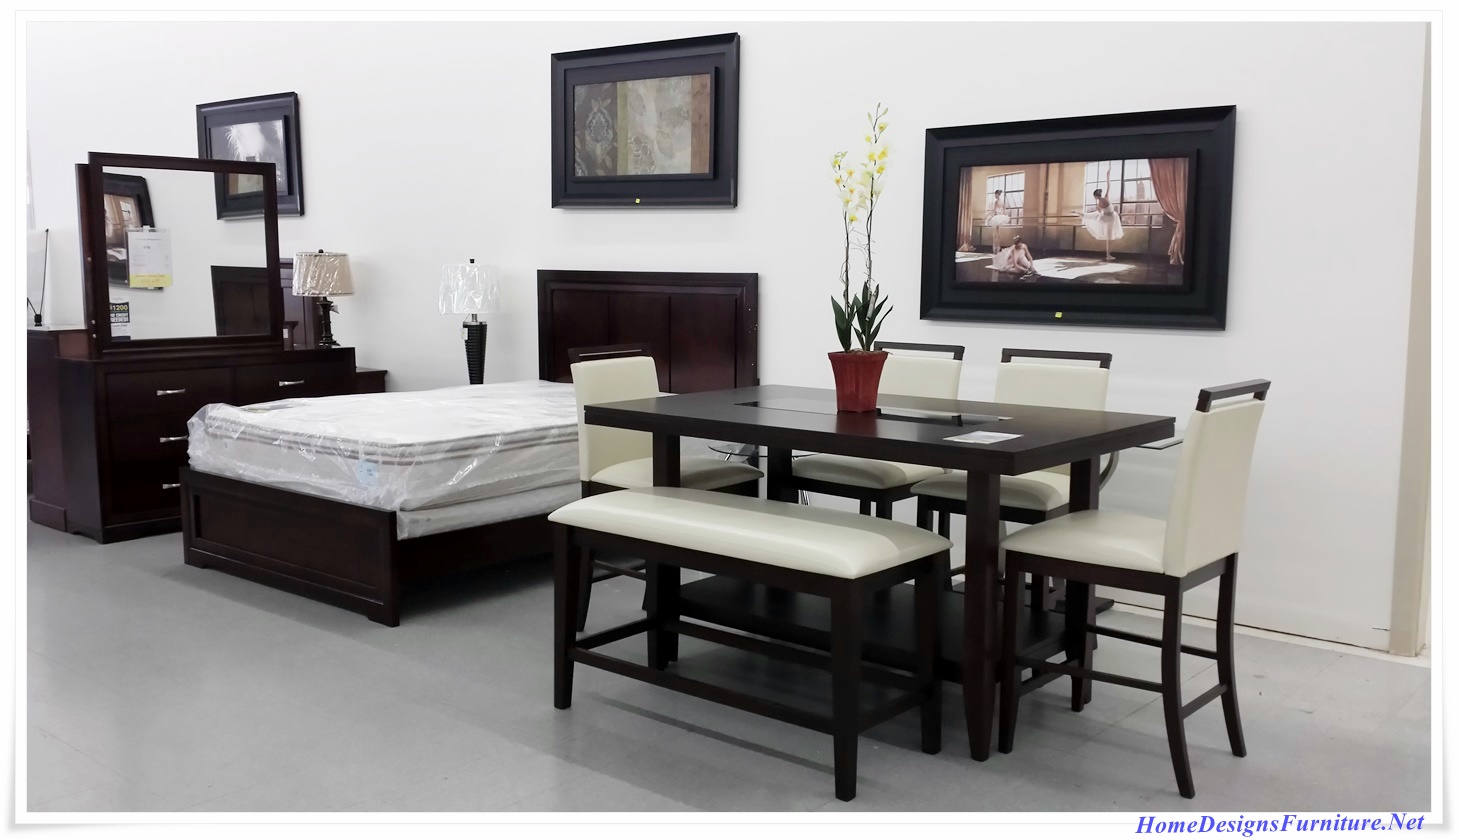 Home Designs Furniture Gallery